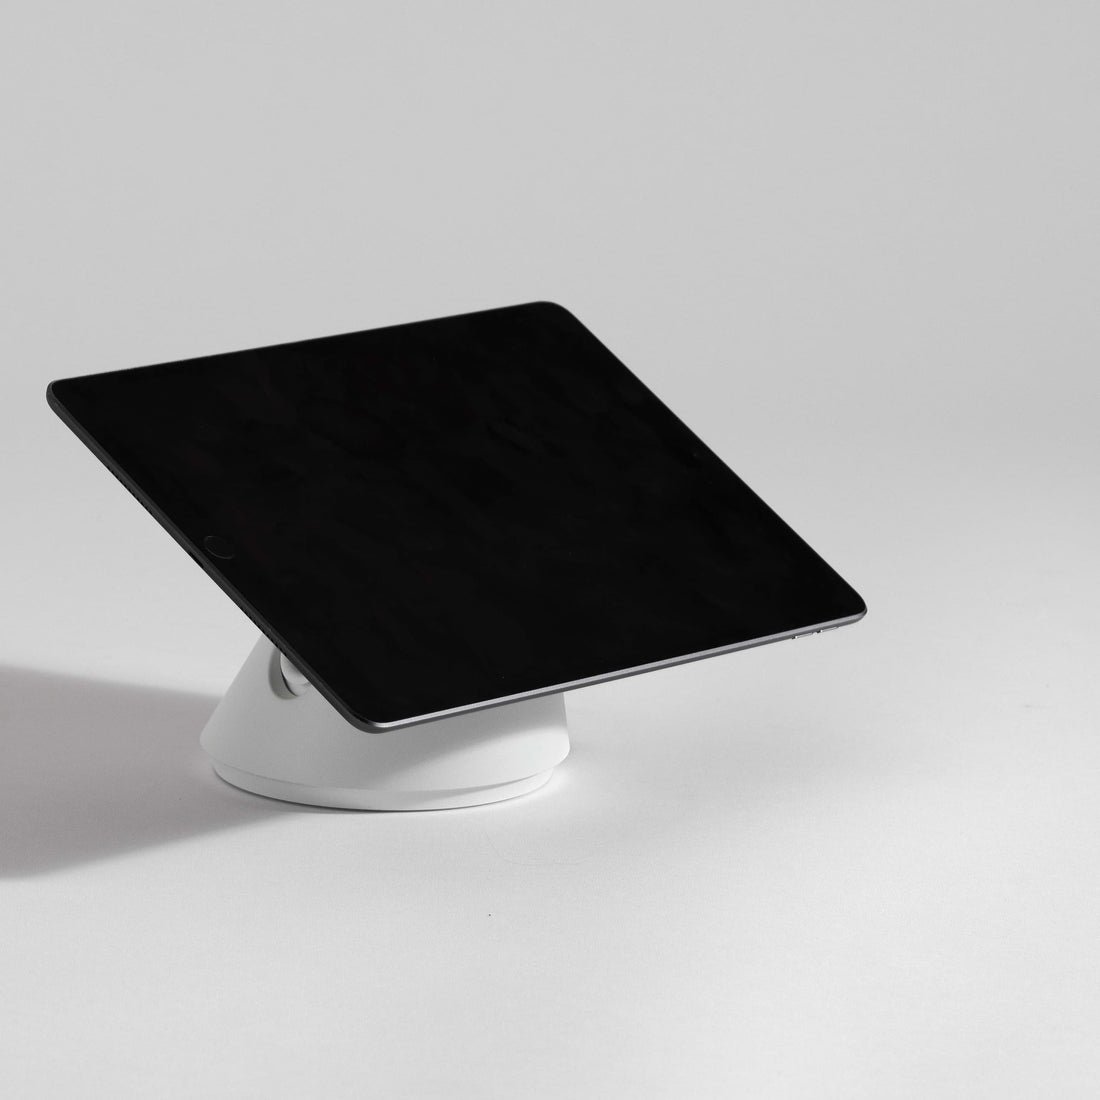 Maclocks iPad Enclosure Fixed Stand – Space Kiosk